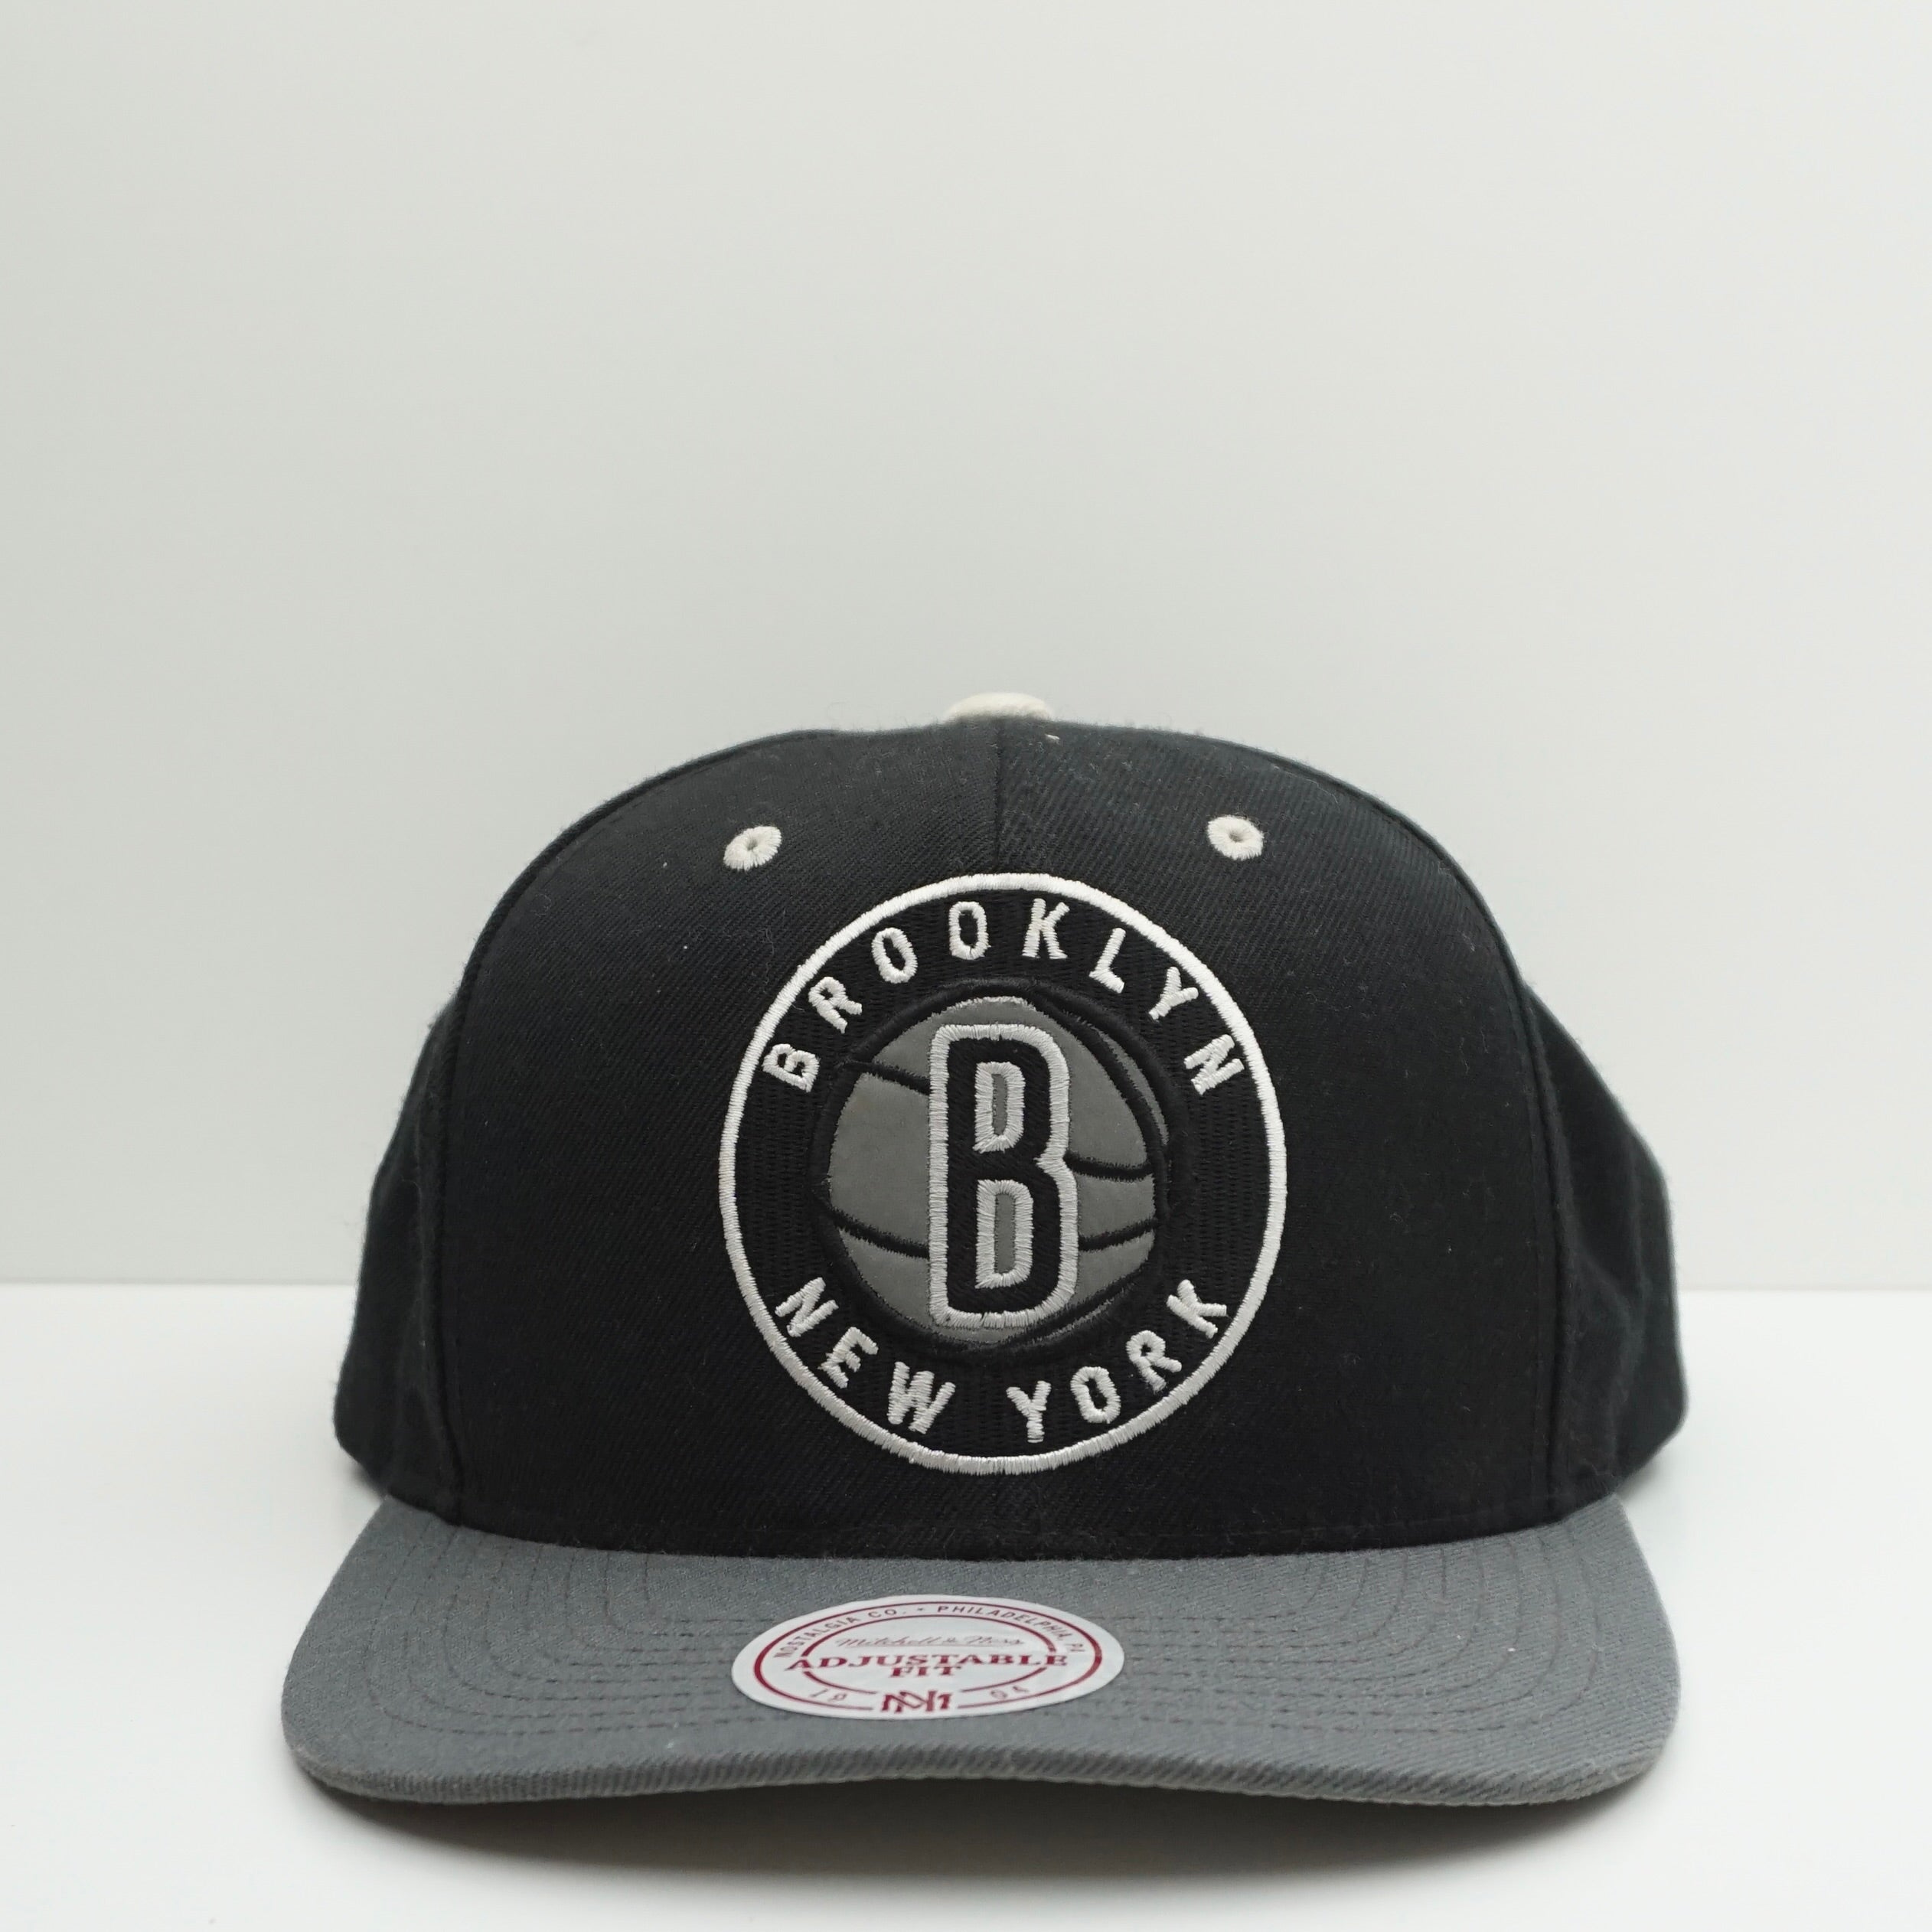 Mitchell & Ness Brooklyn New York Snapback Cap